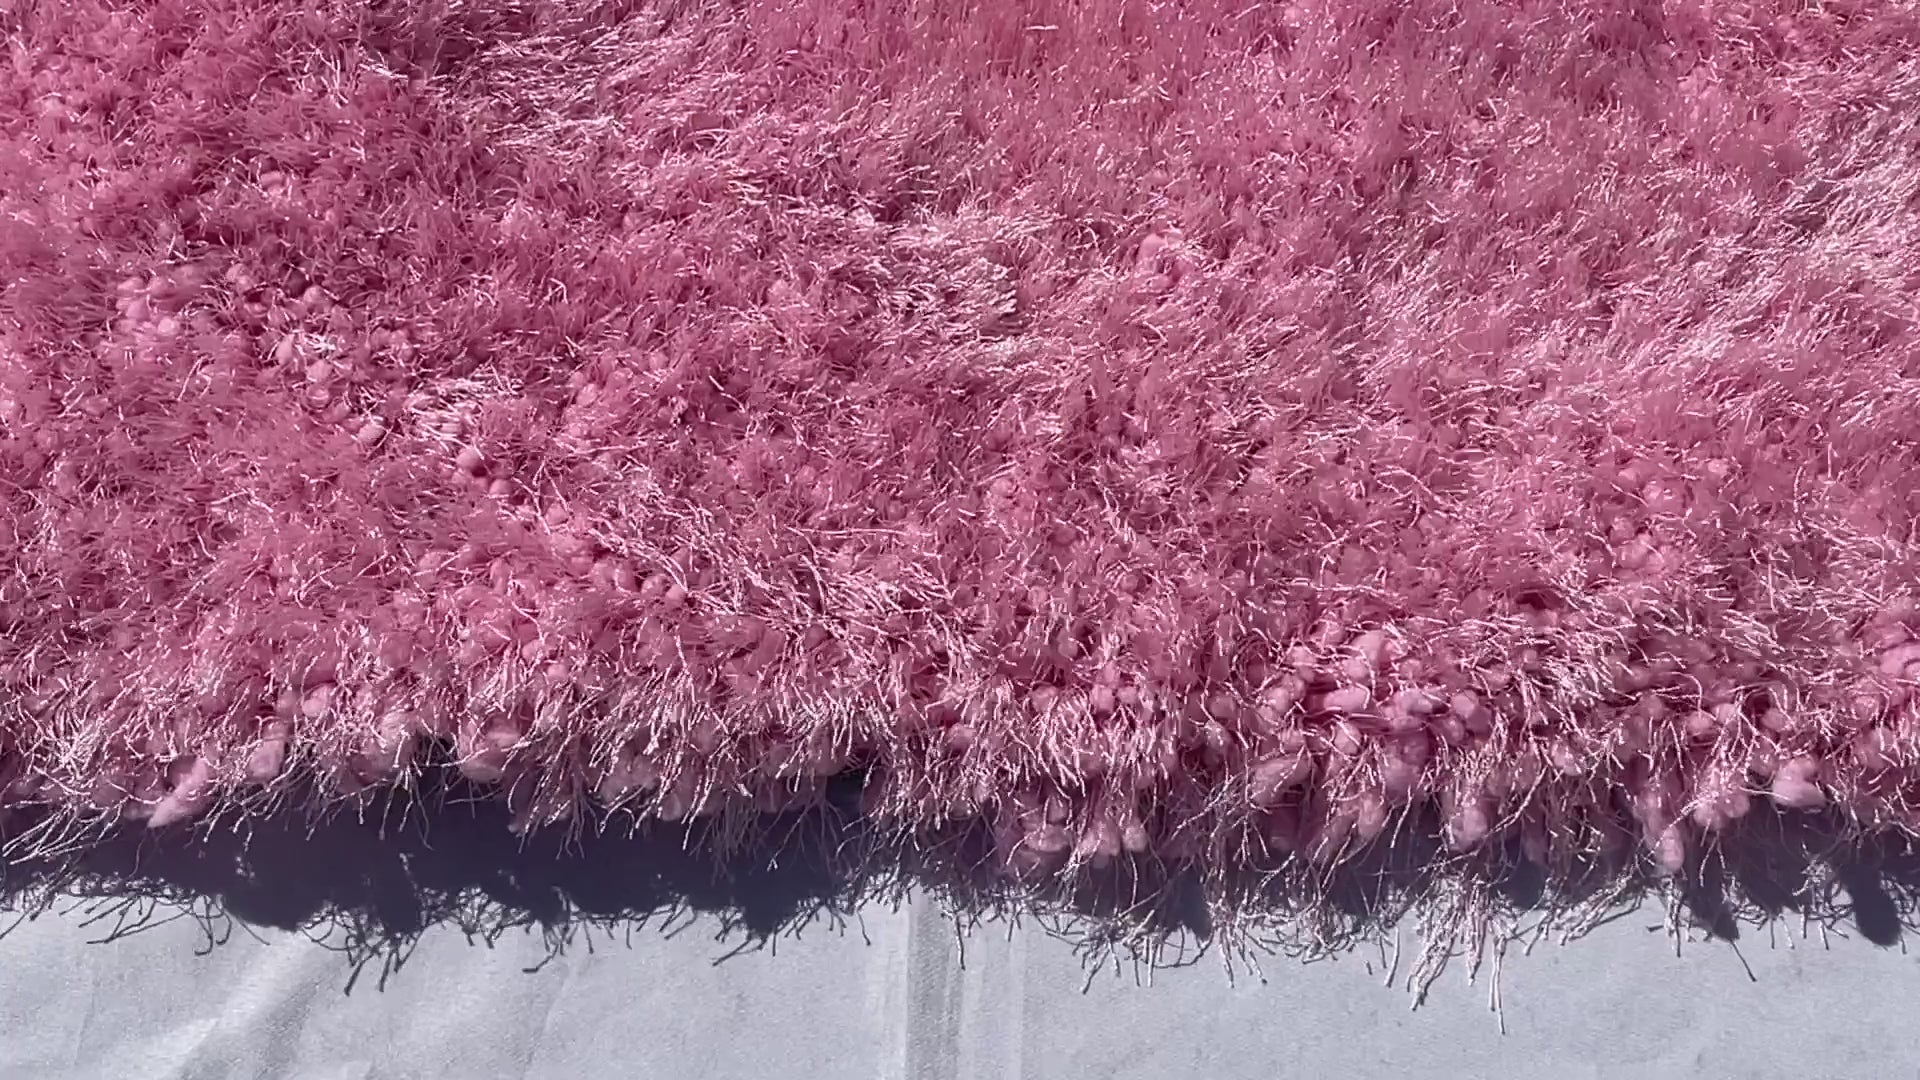 Romance Pink Solid Shag Area Rug